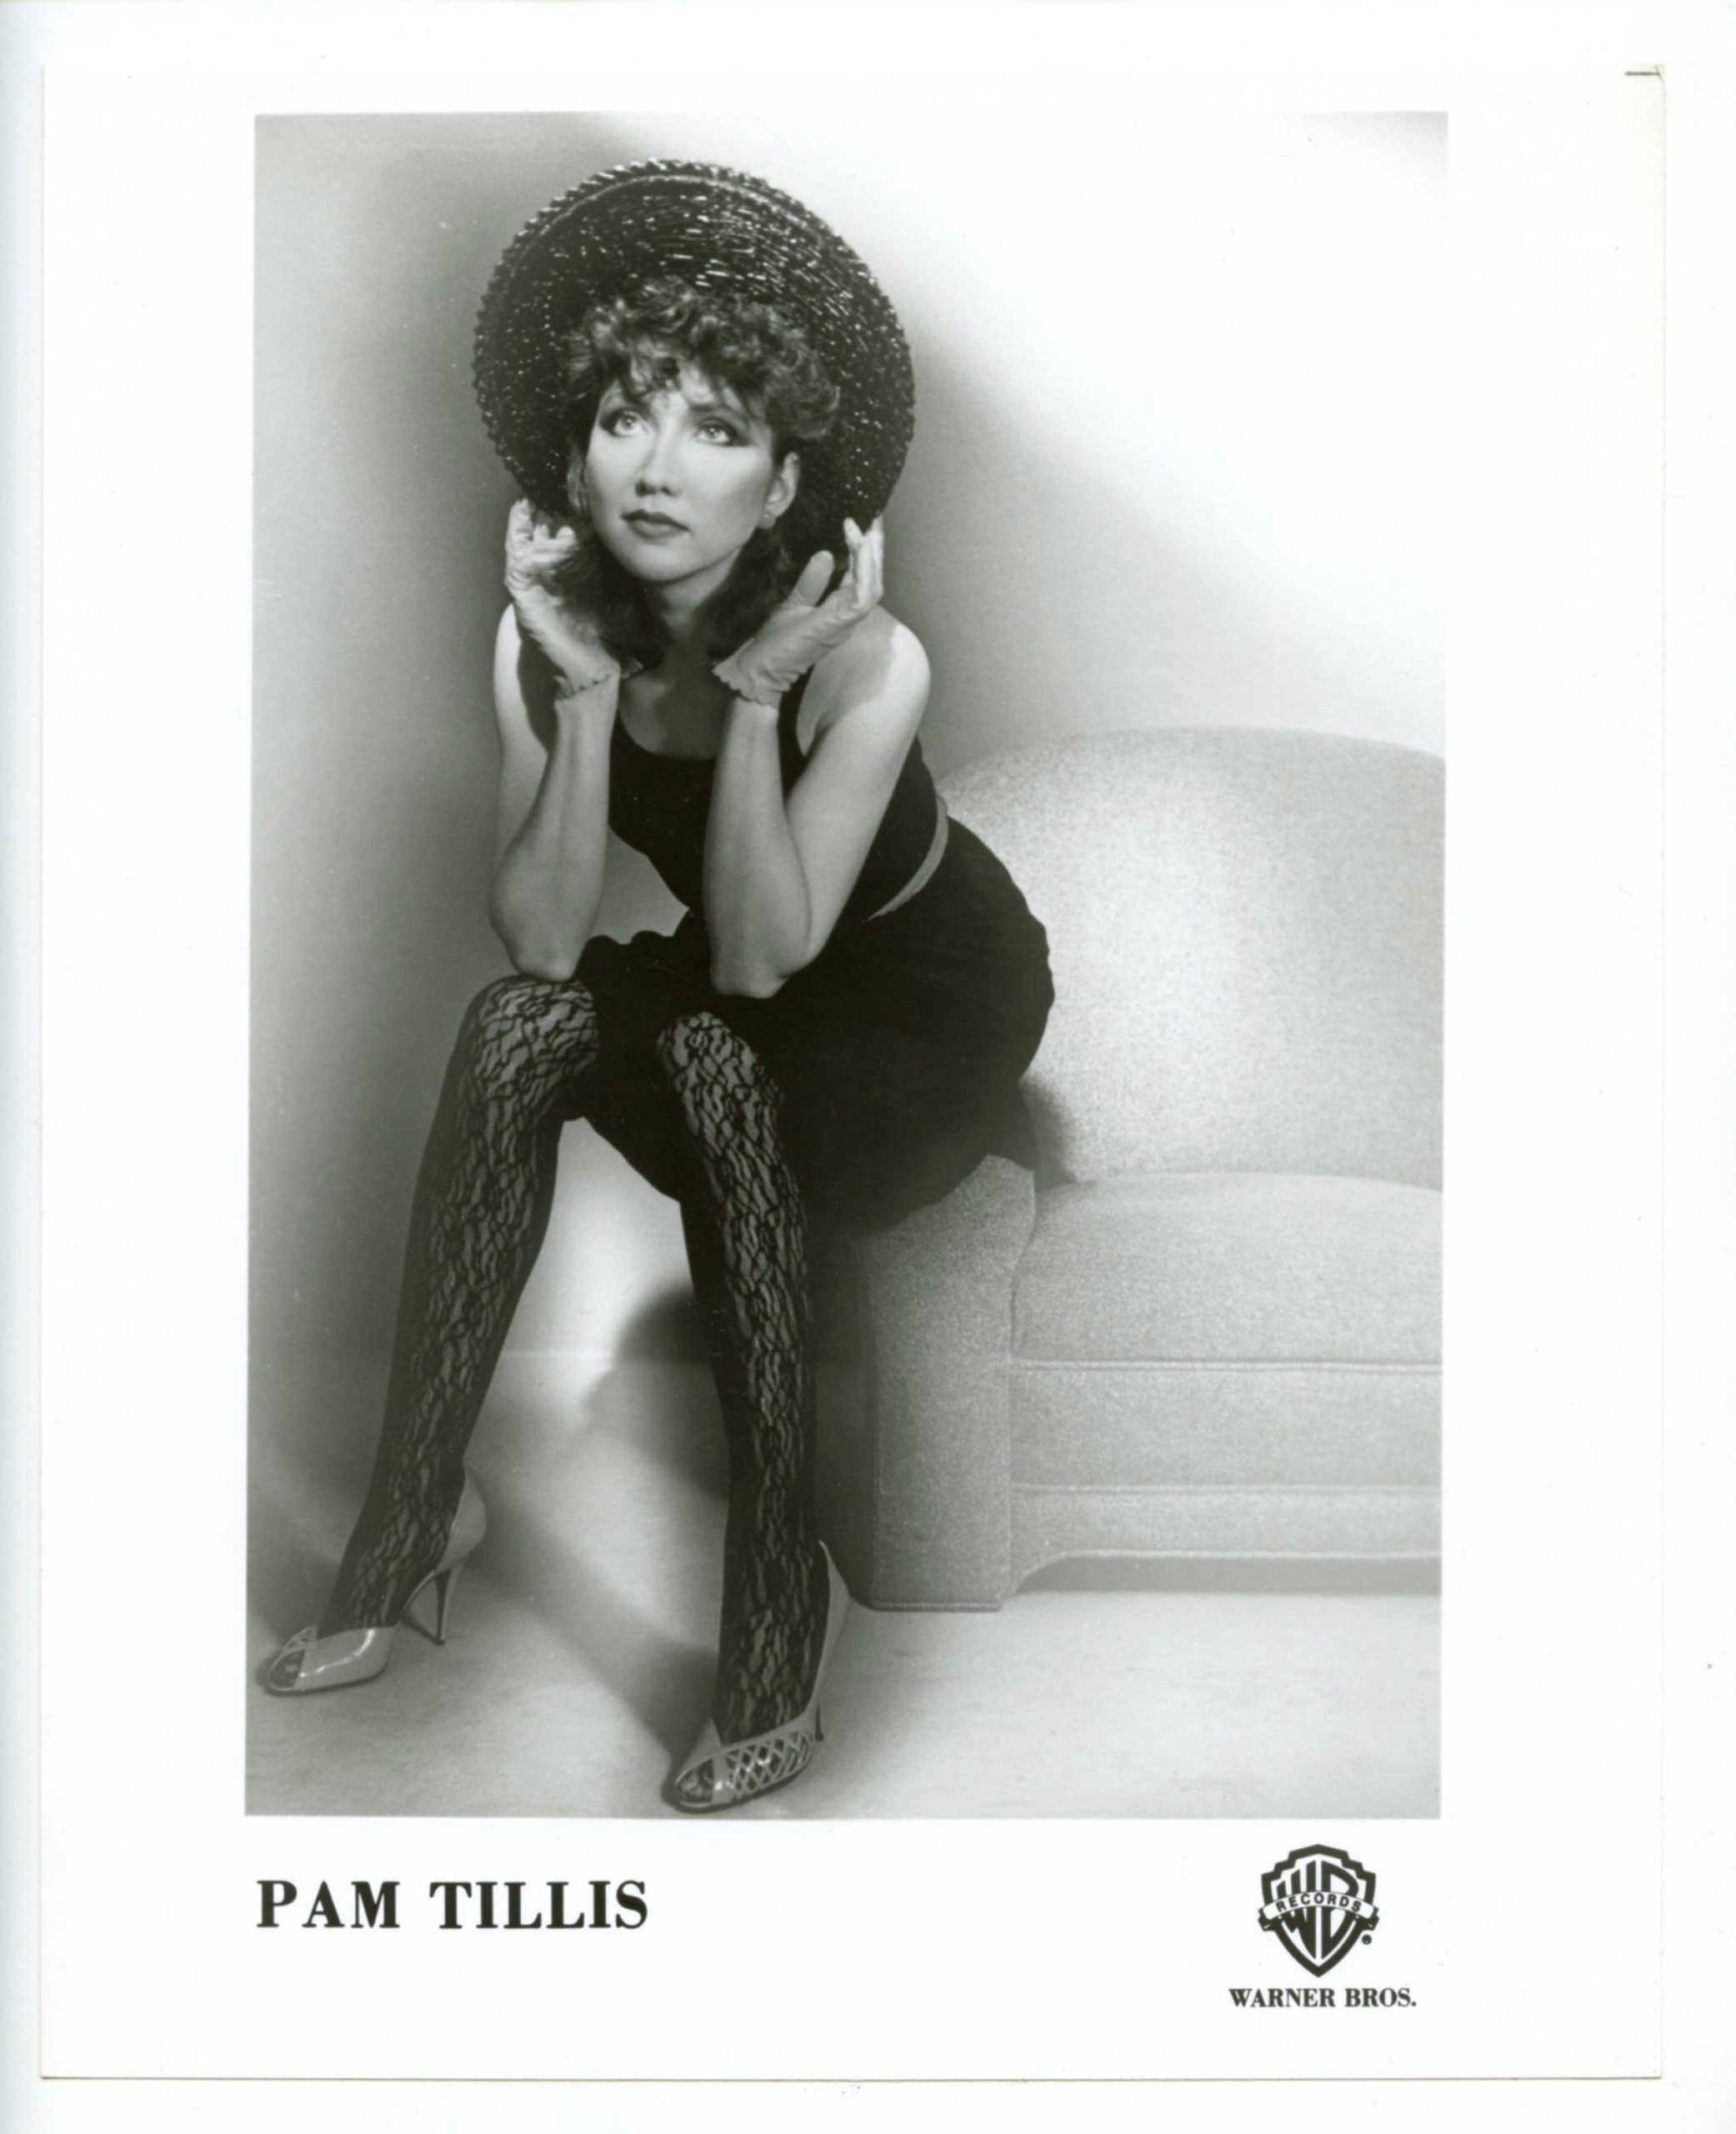 Pam Tillis Photo 1980s Warner Bros Records